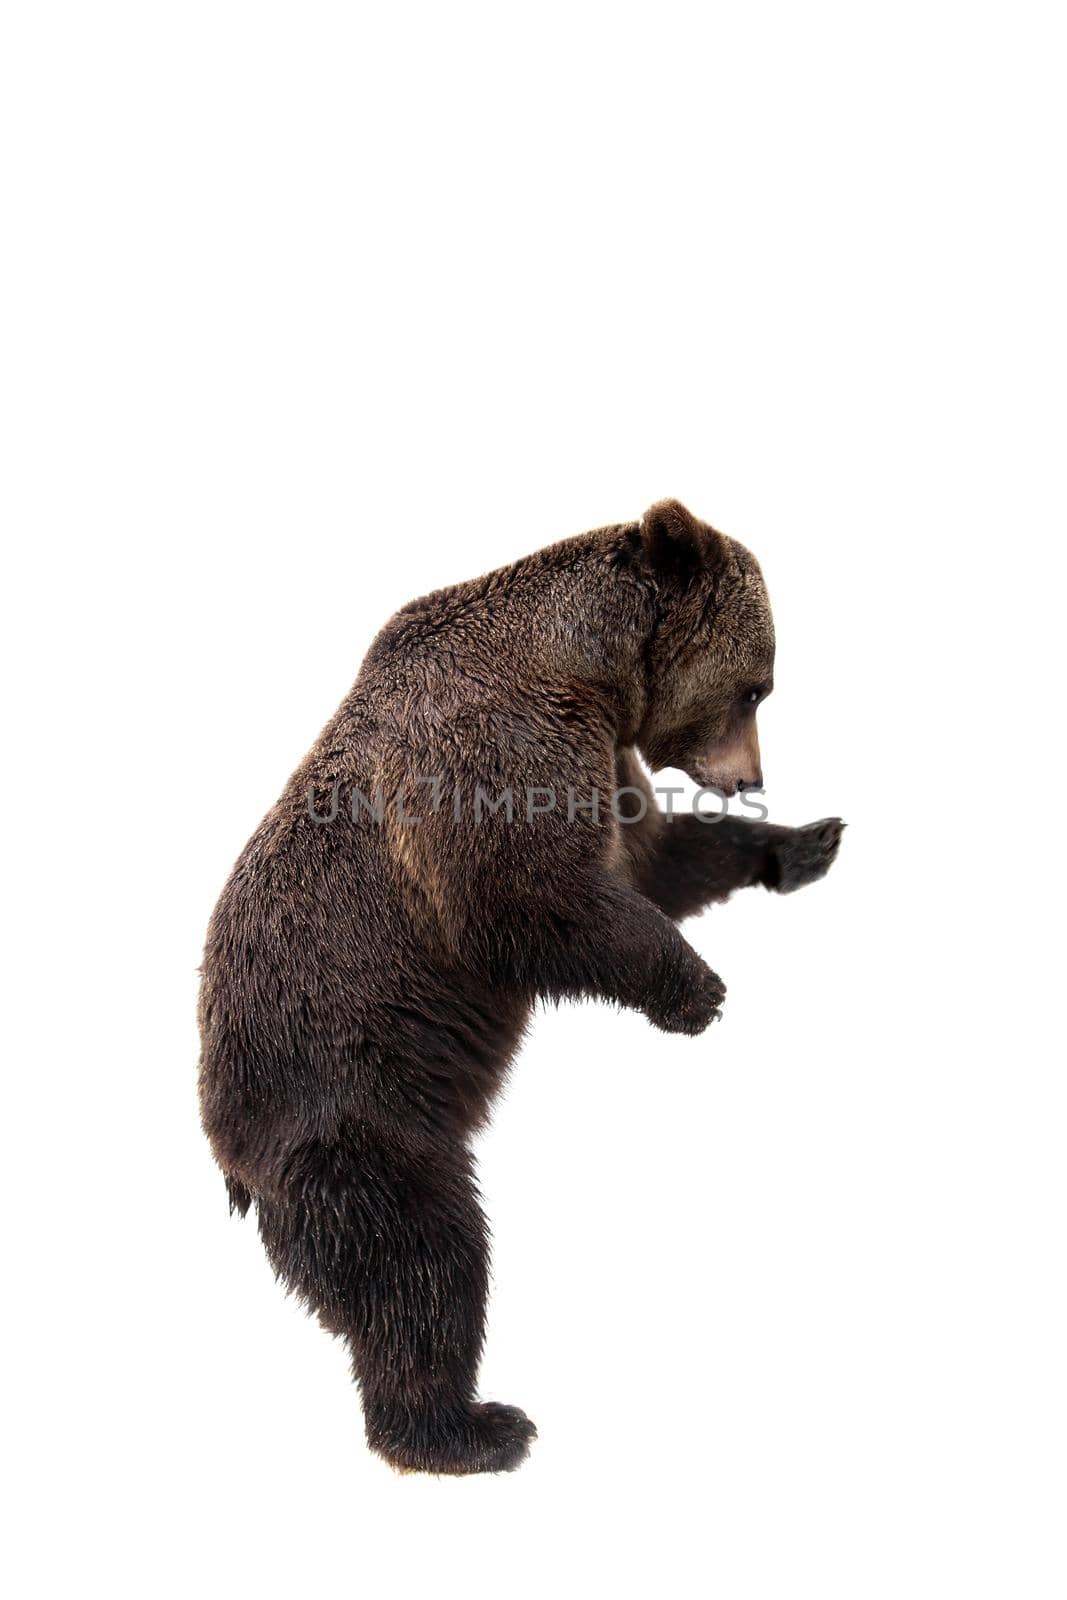 Brown bear, Ursus arctos, isolated on white background